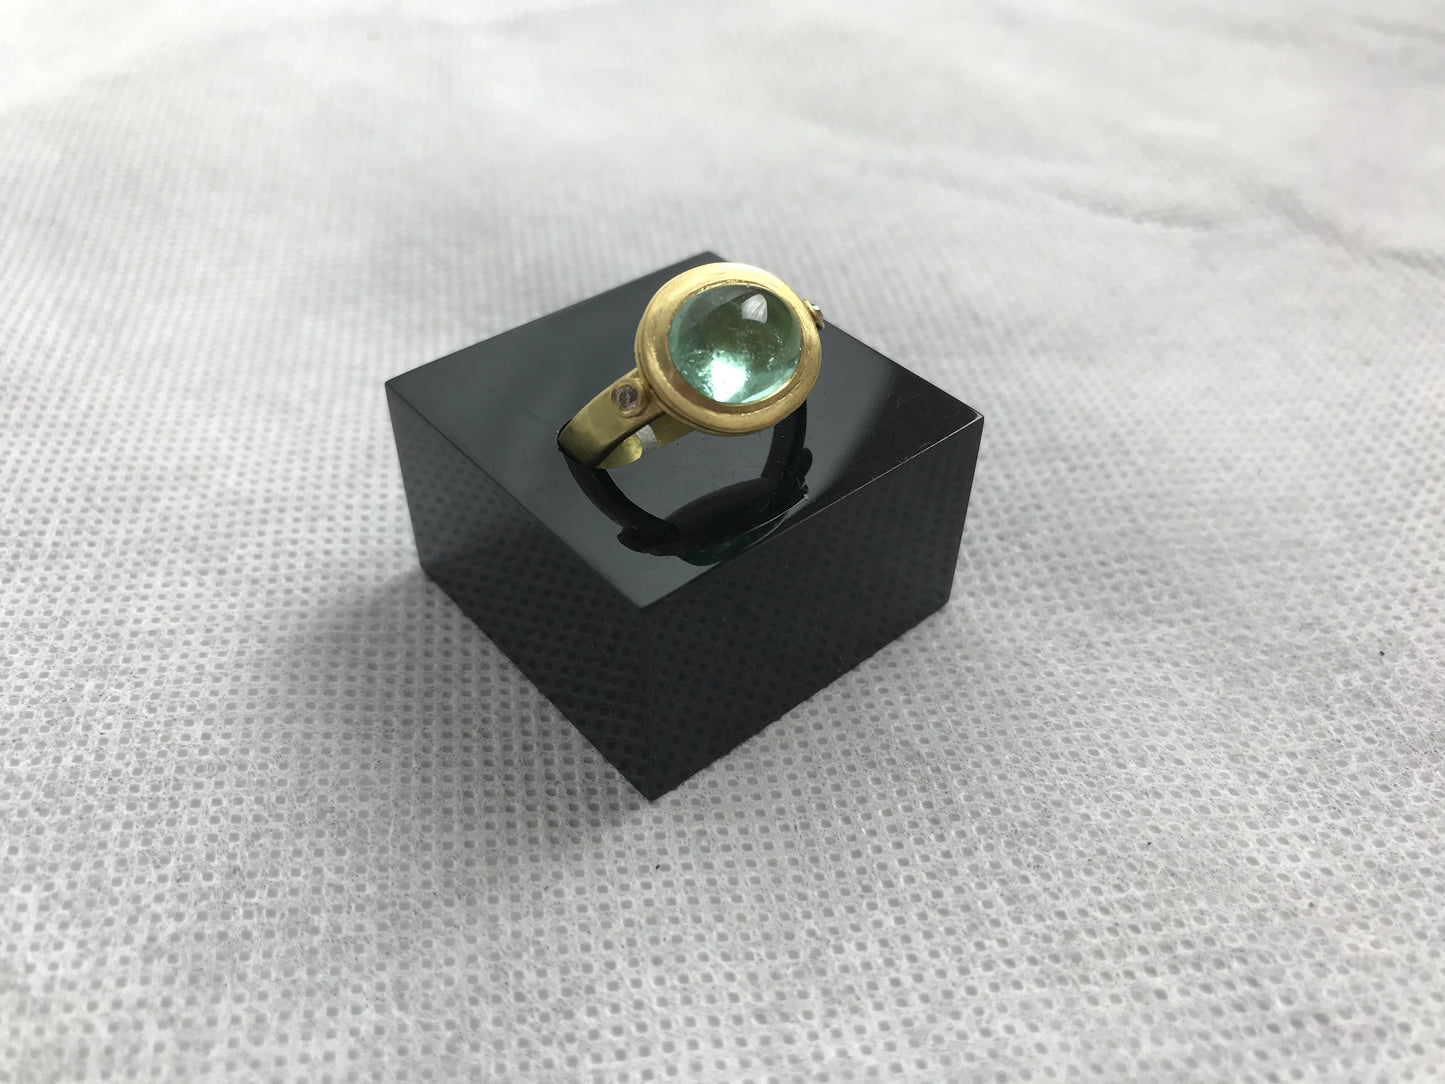 Scott-Moncrieff, Jean: Gold, green tourmaline and diamond ring